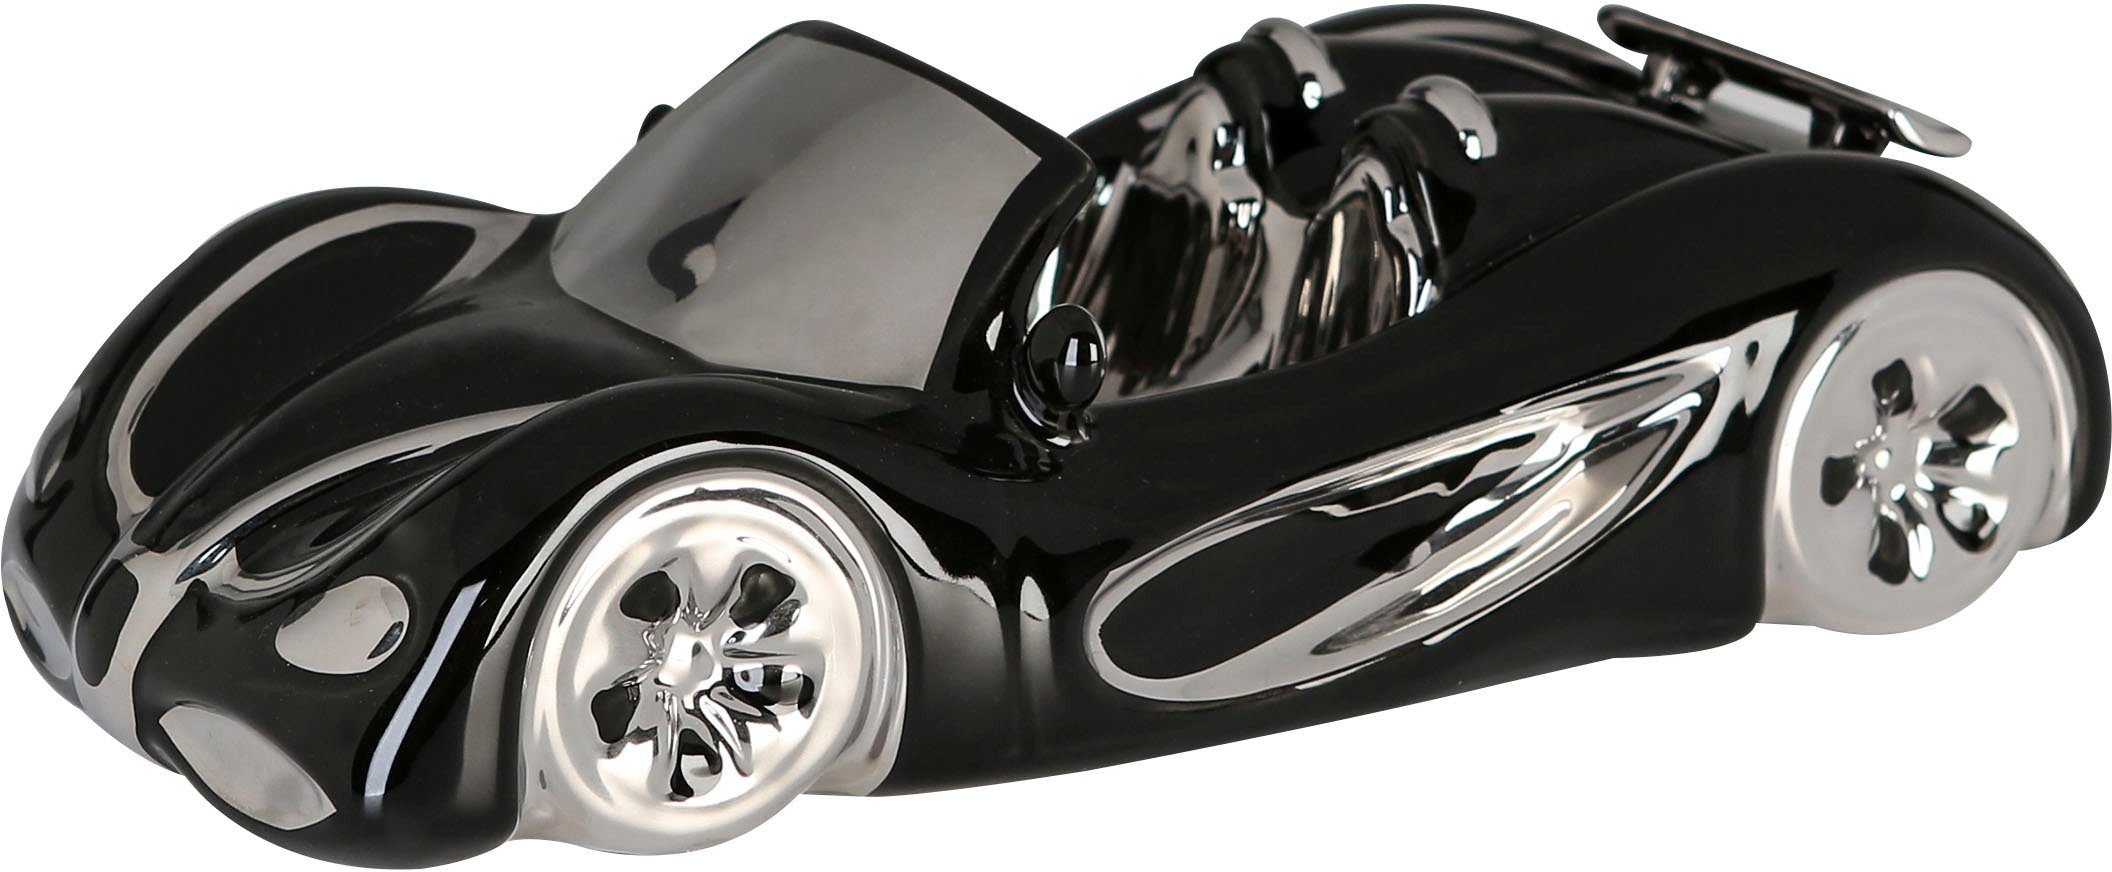 Gilde - decoratief figuur - auto cabrio - zwart/zilver - keramiek